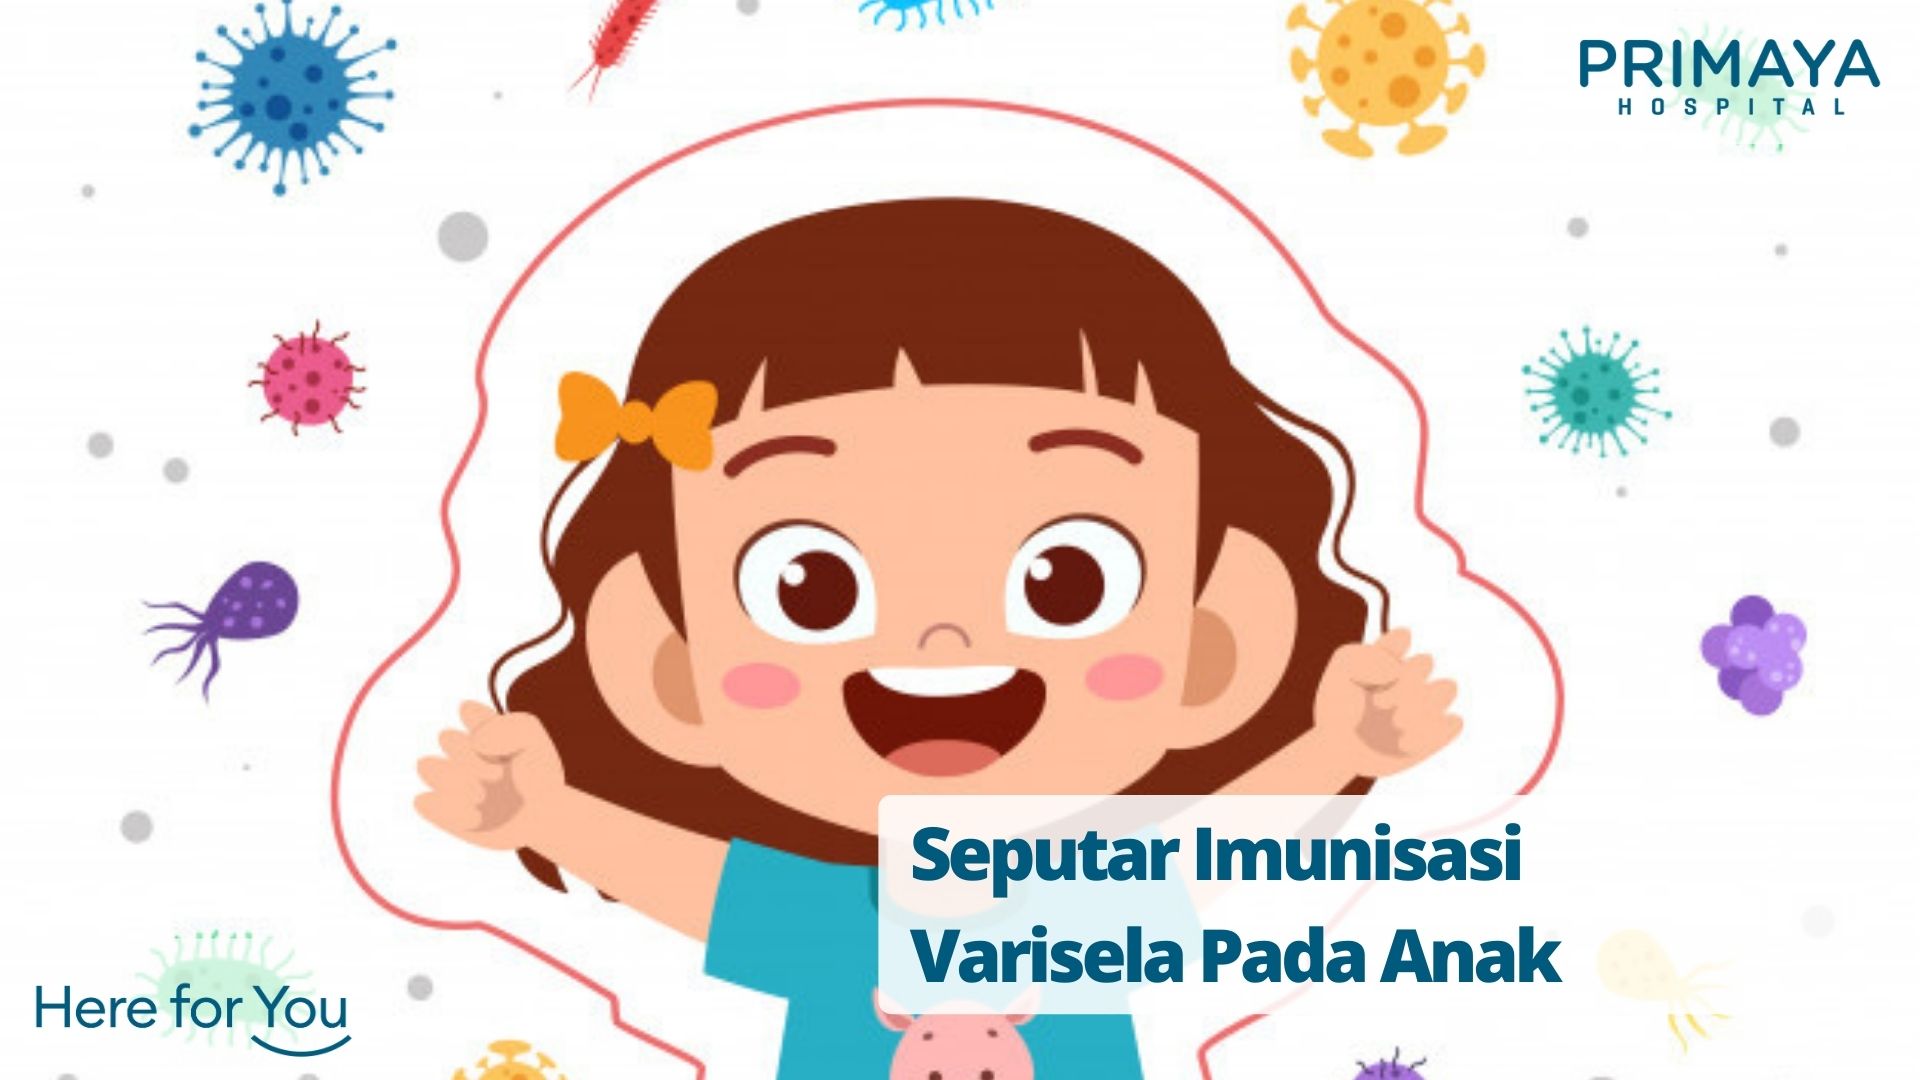 Seputar Imunisasi Varisela pada Anak